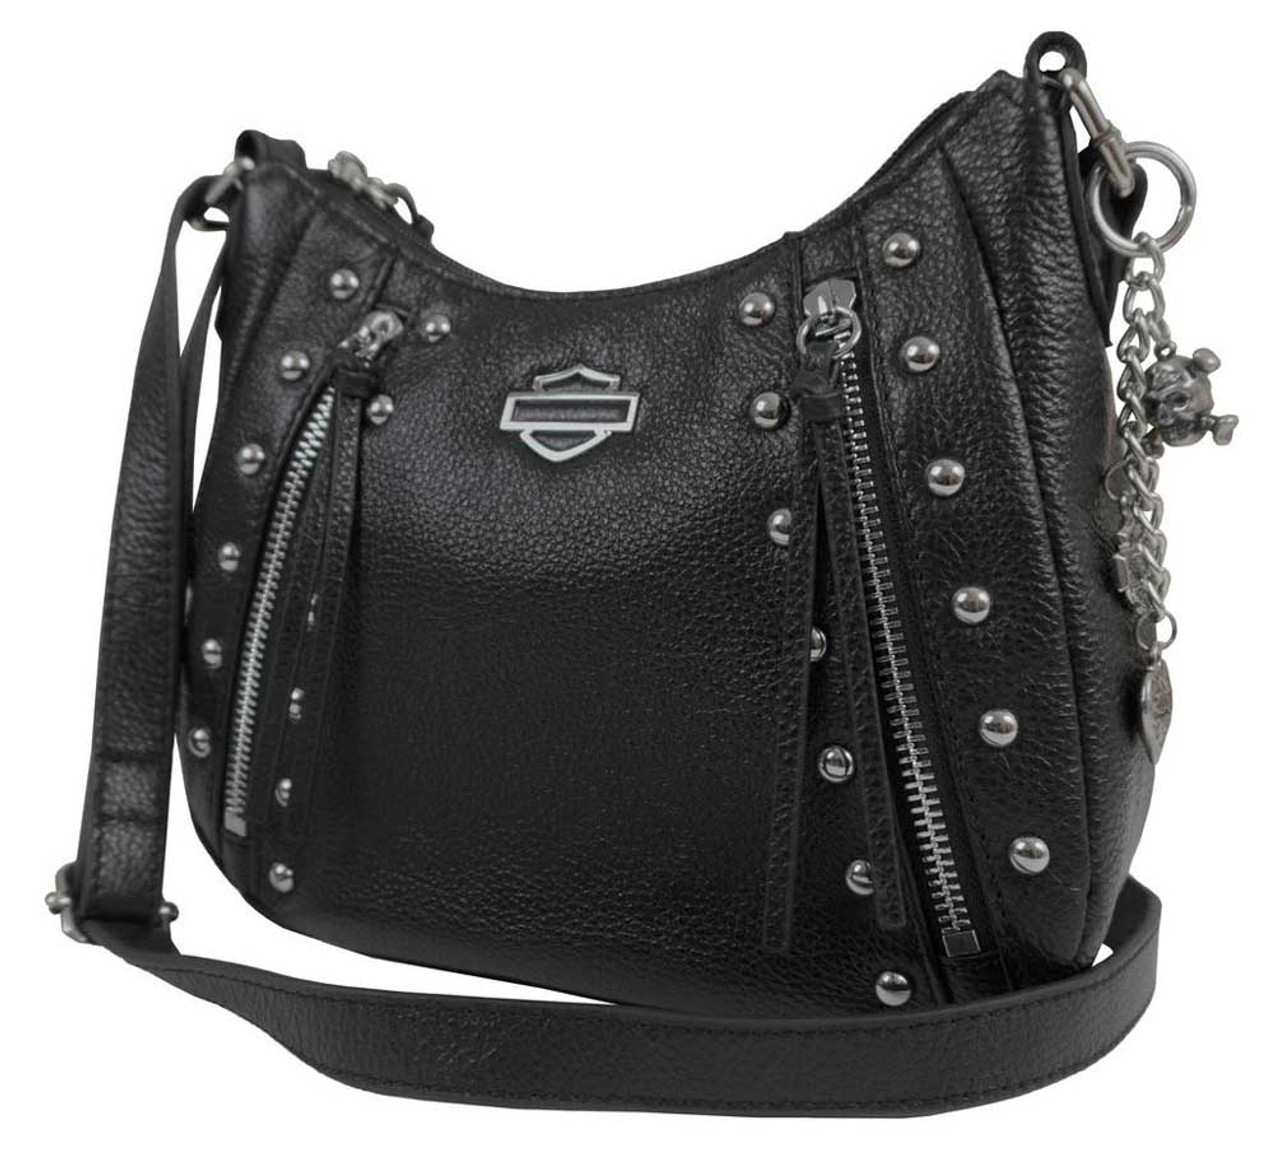 Harley Davidson studded leather crossbody bag. $140 shipped, DM to